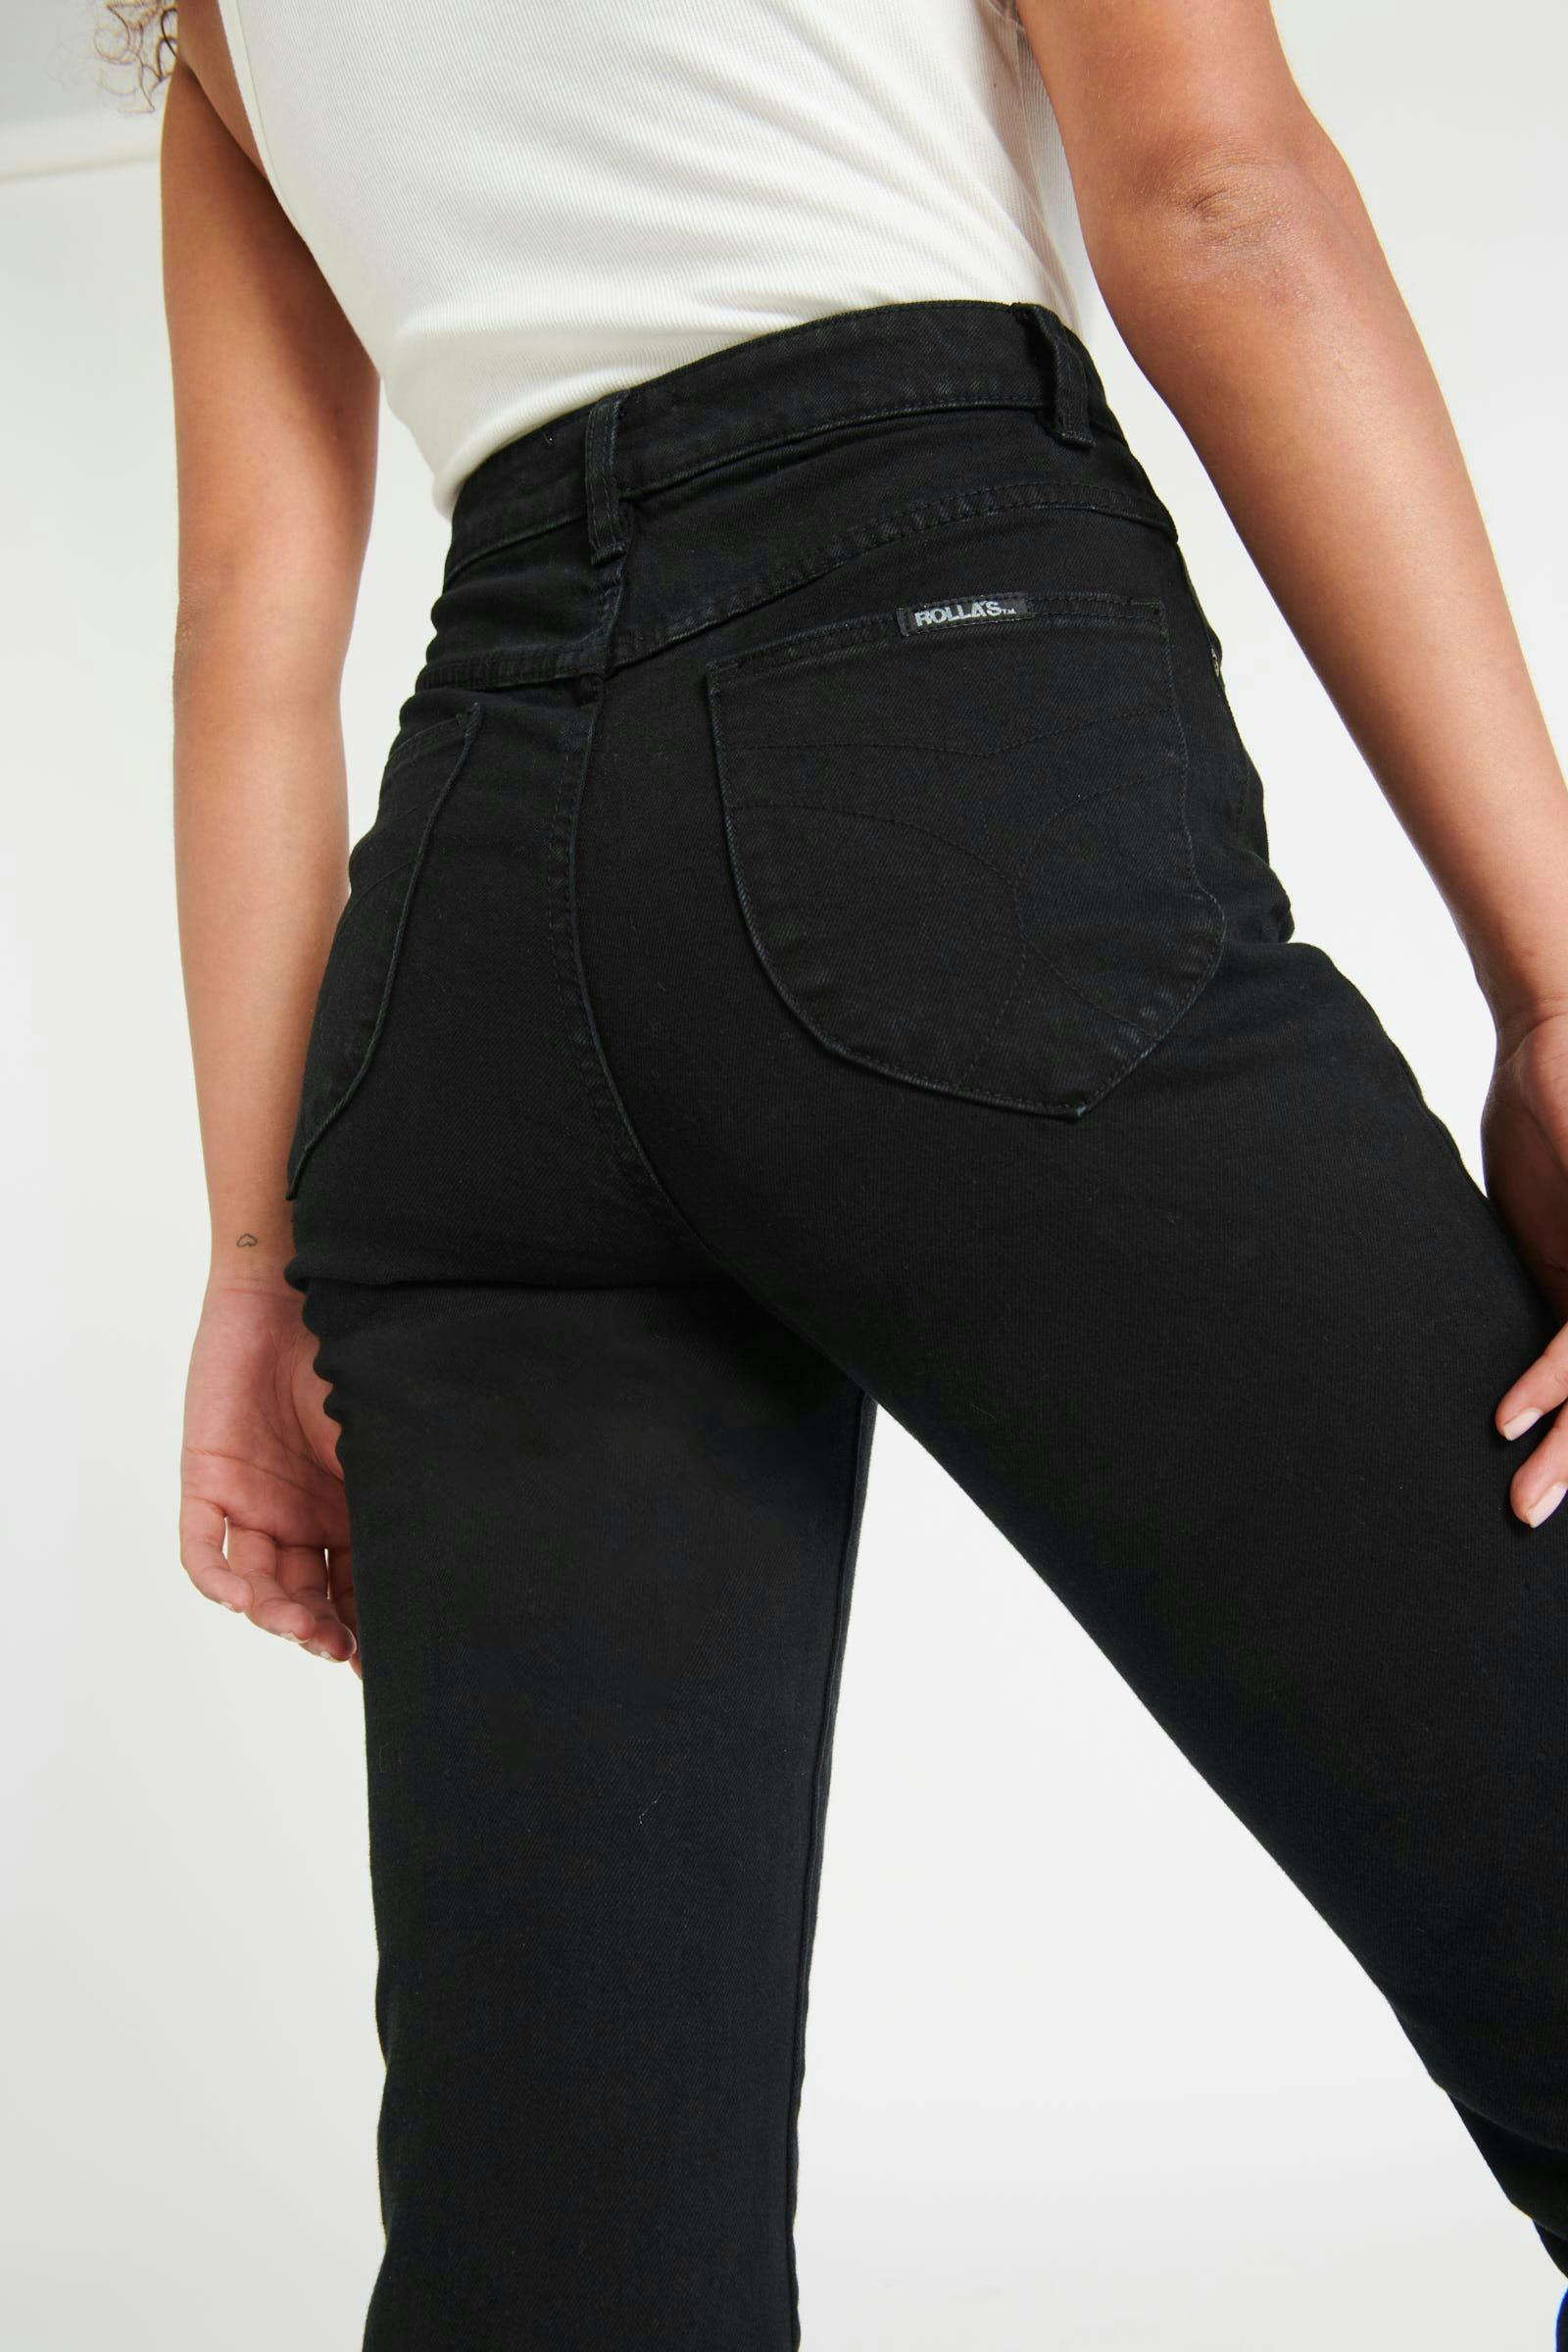 Buy Dusters - Comfort Black Online | Rollas Jeans